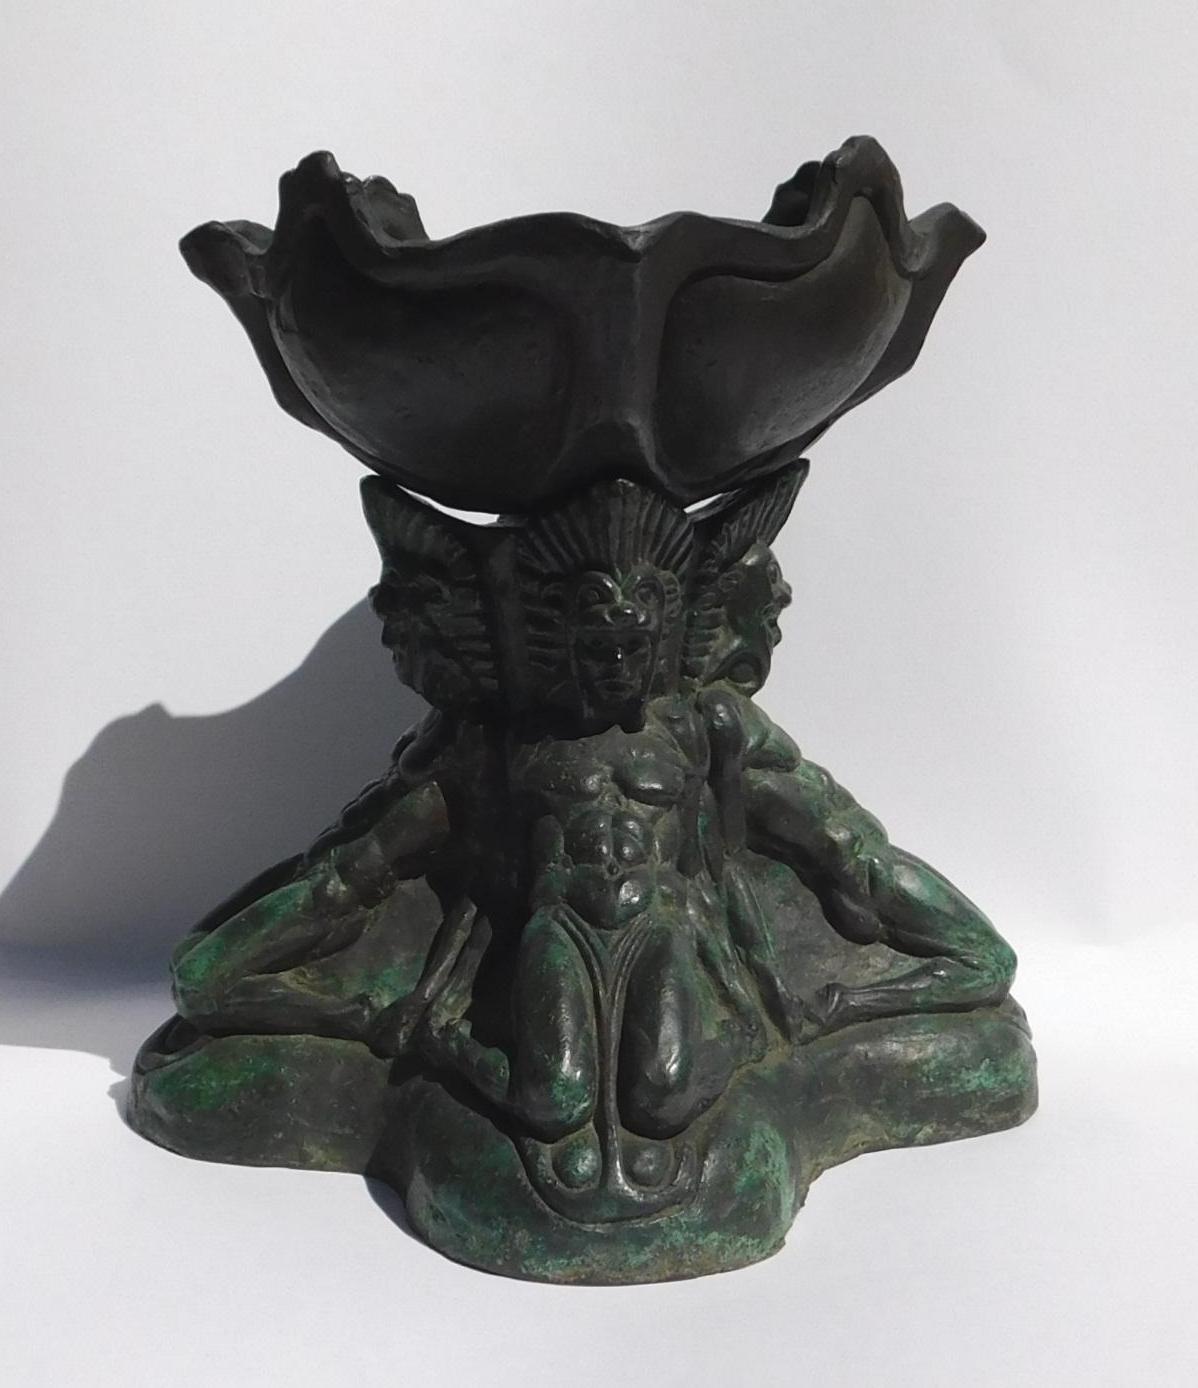 20th Century Donal Hord Bronze Sculpture, 1926, “Kneeling Indians” For Sale